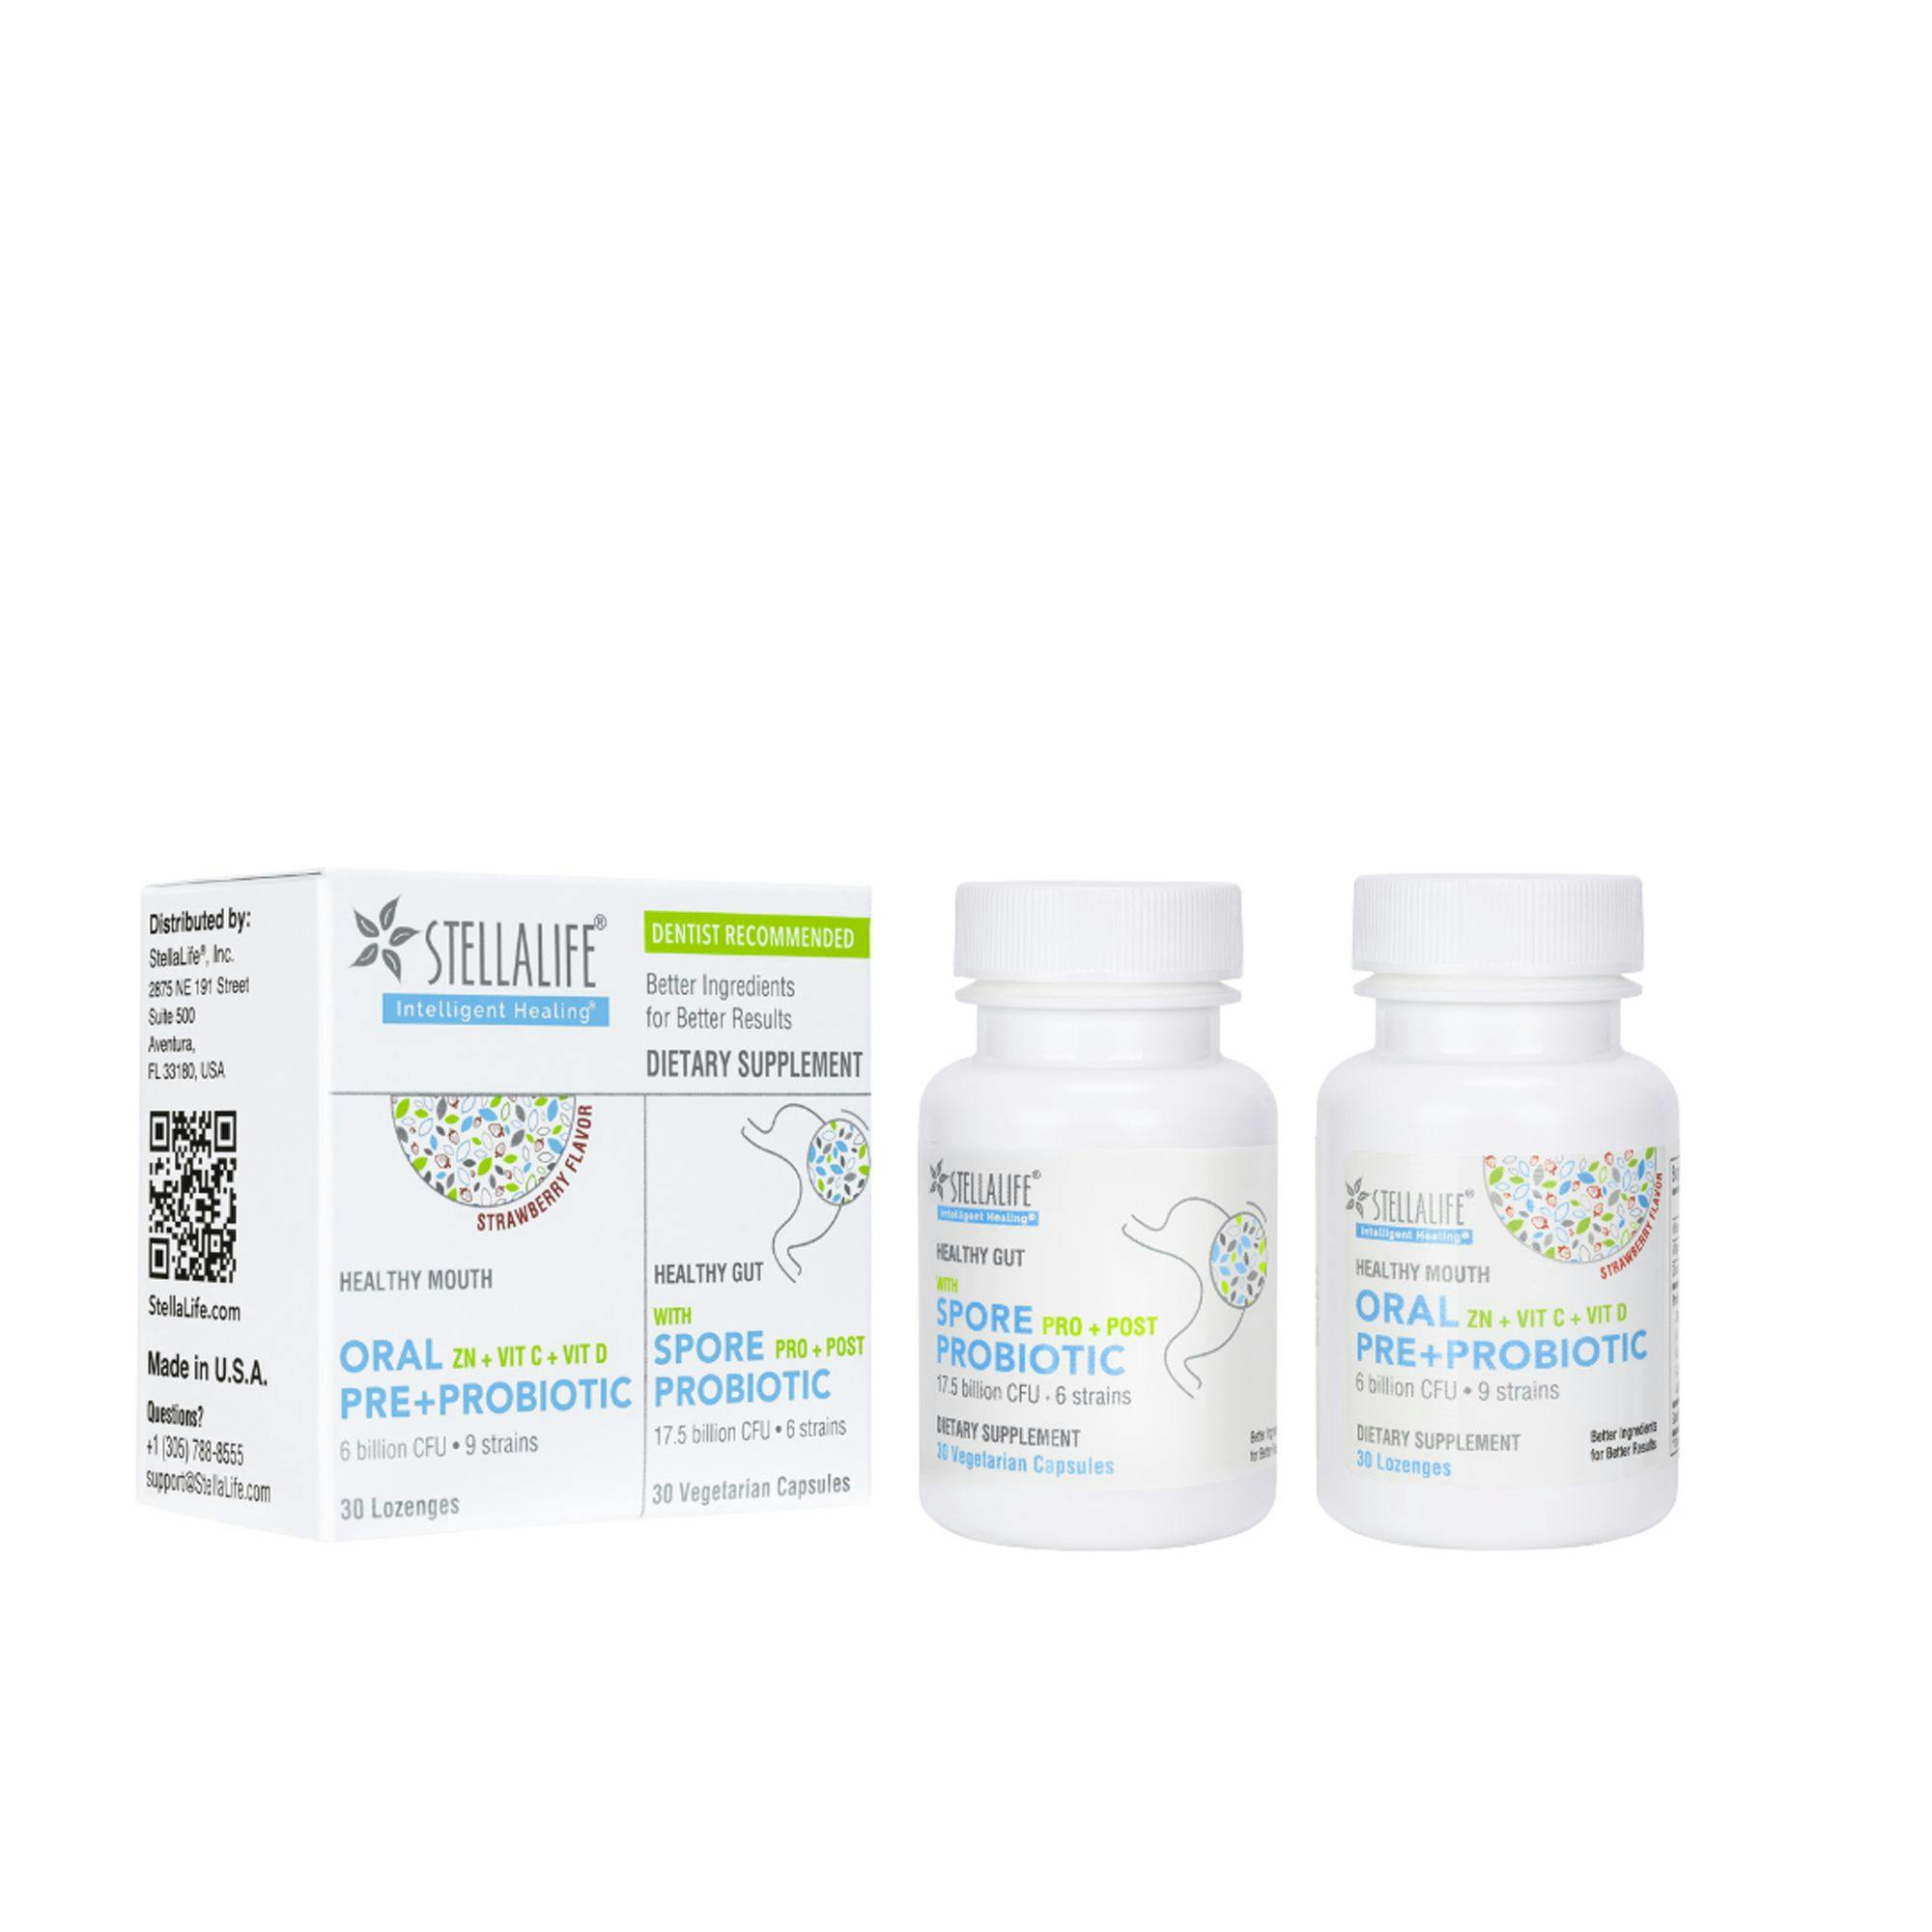 StellaLife Announces Probiotics Kit Combining Oral and Gut Probiotics